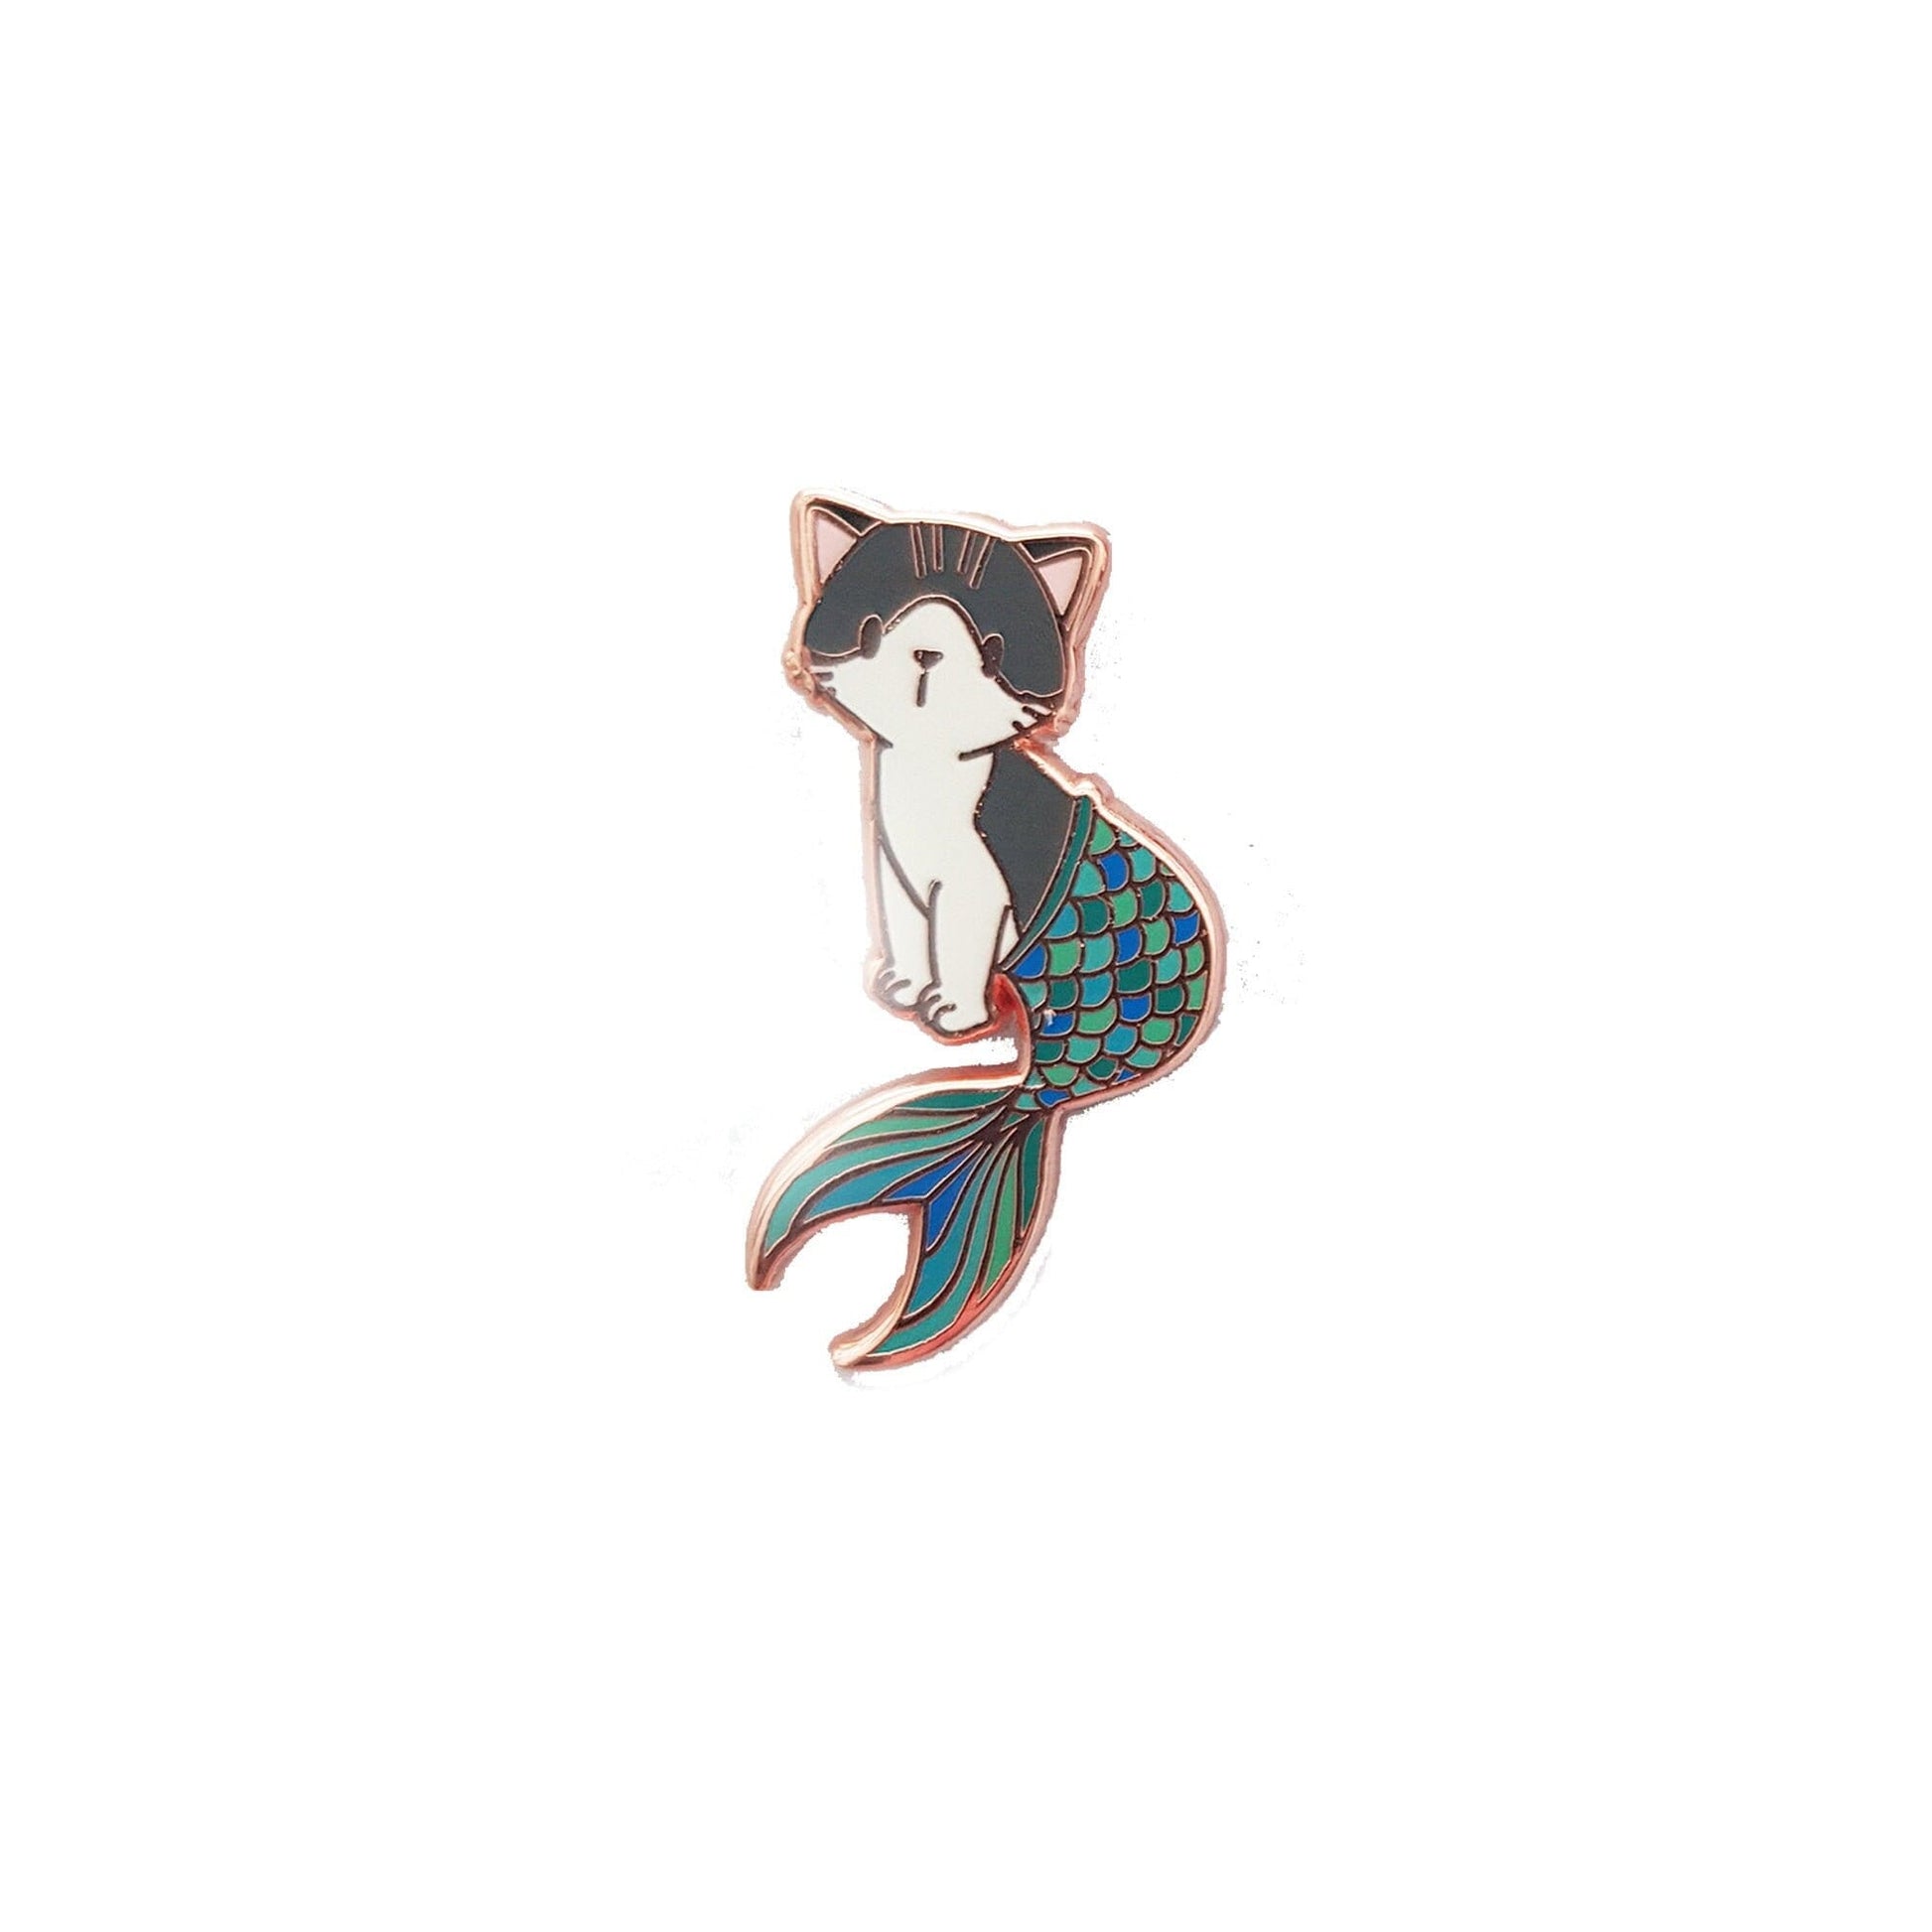 Purrmaid I - Small Enamel Pin (Cat Mermaid, Grey Tabby Cat with Aqua/Green/Blue Tail), Pins, Brooches & Lapel Pins